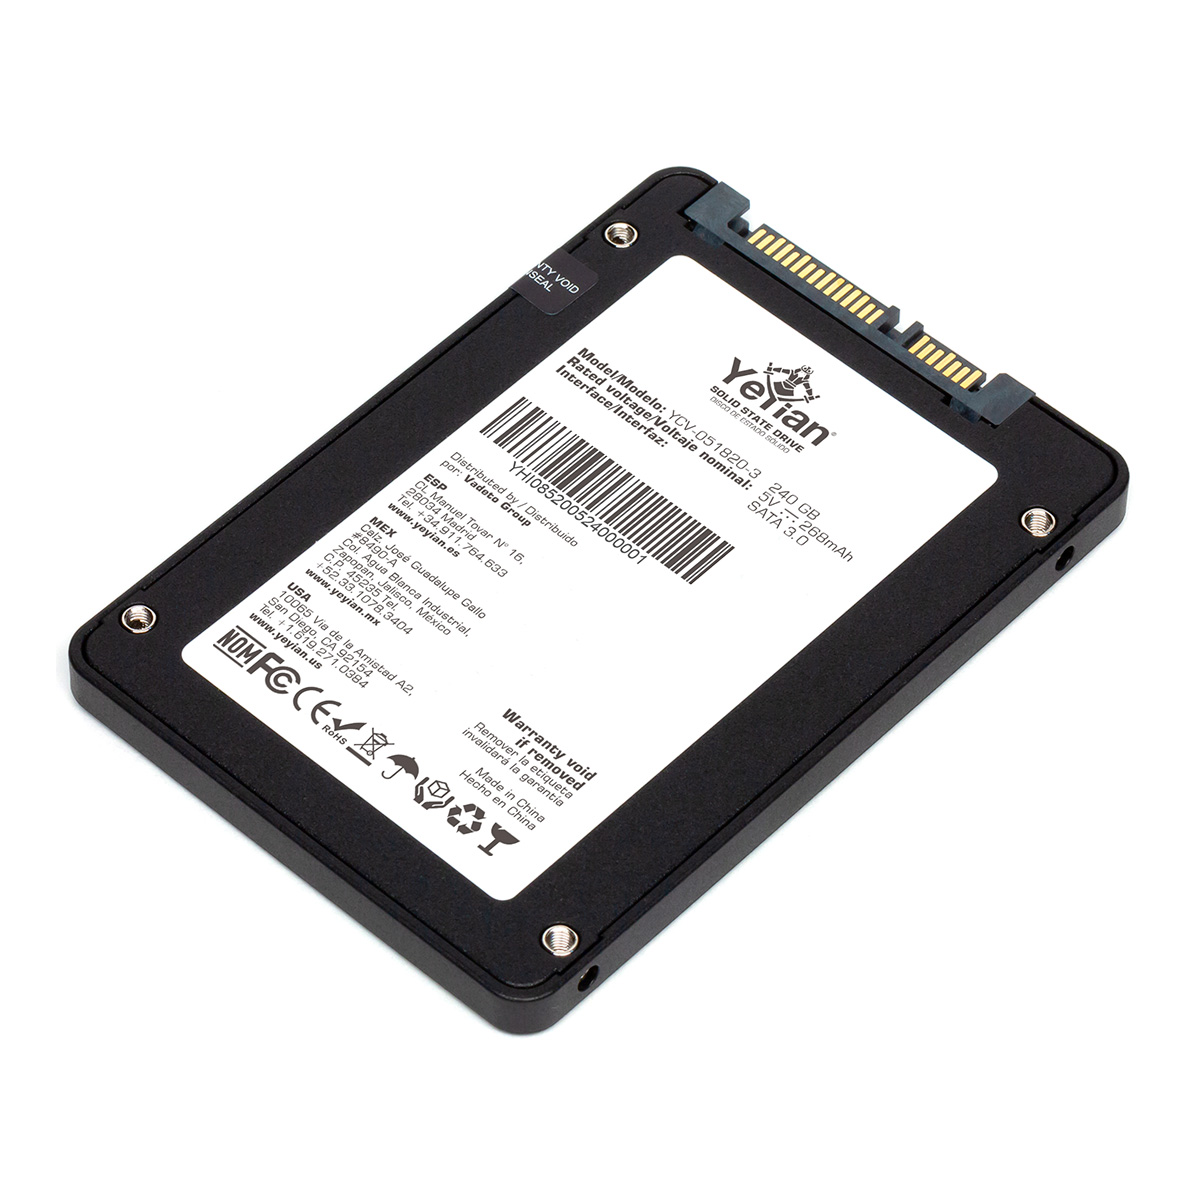 UNIDAD SSD YEYIAN YCV-051820-3 VALK, 240GB, SATA3, 450MB/S, 2.5